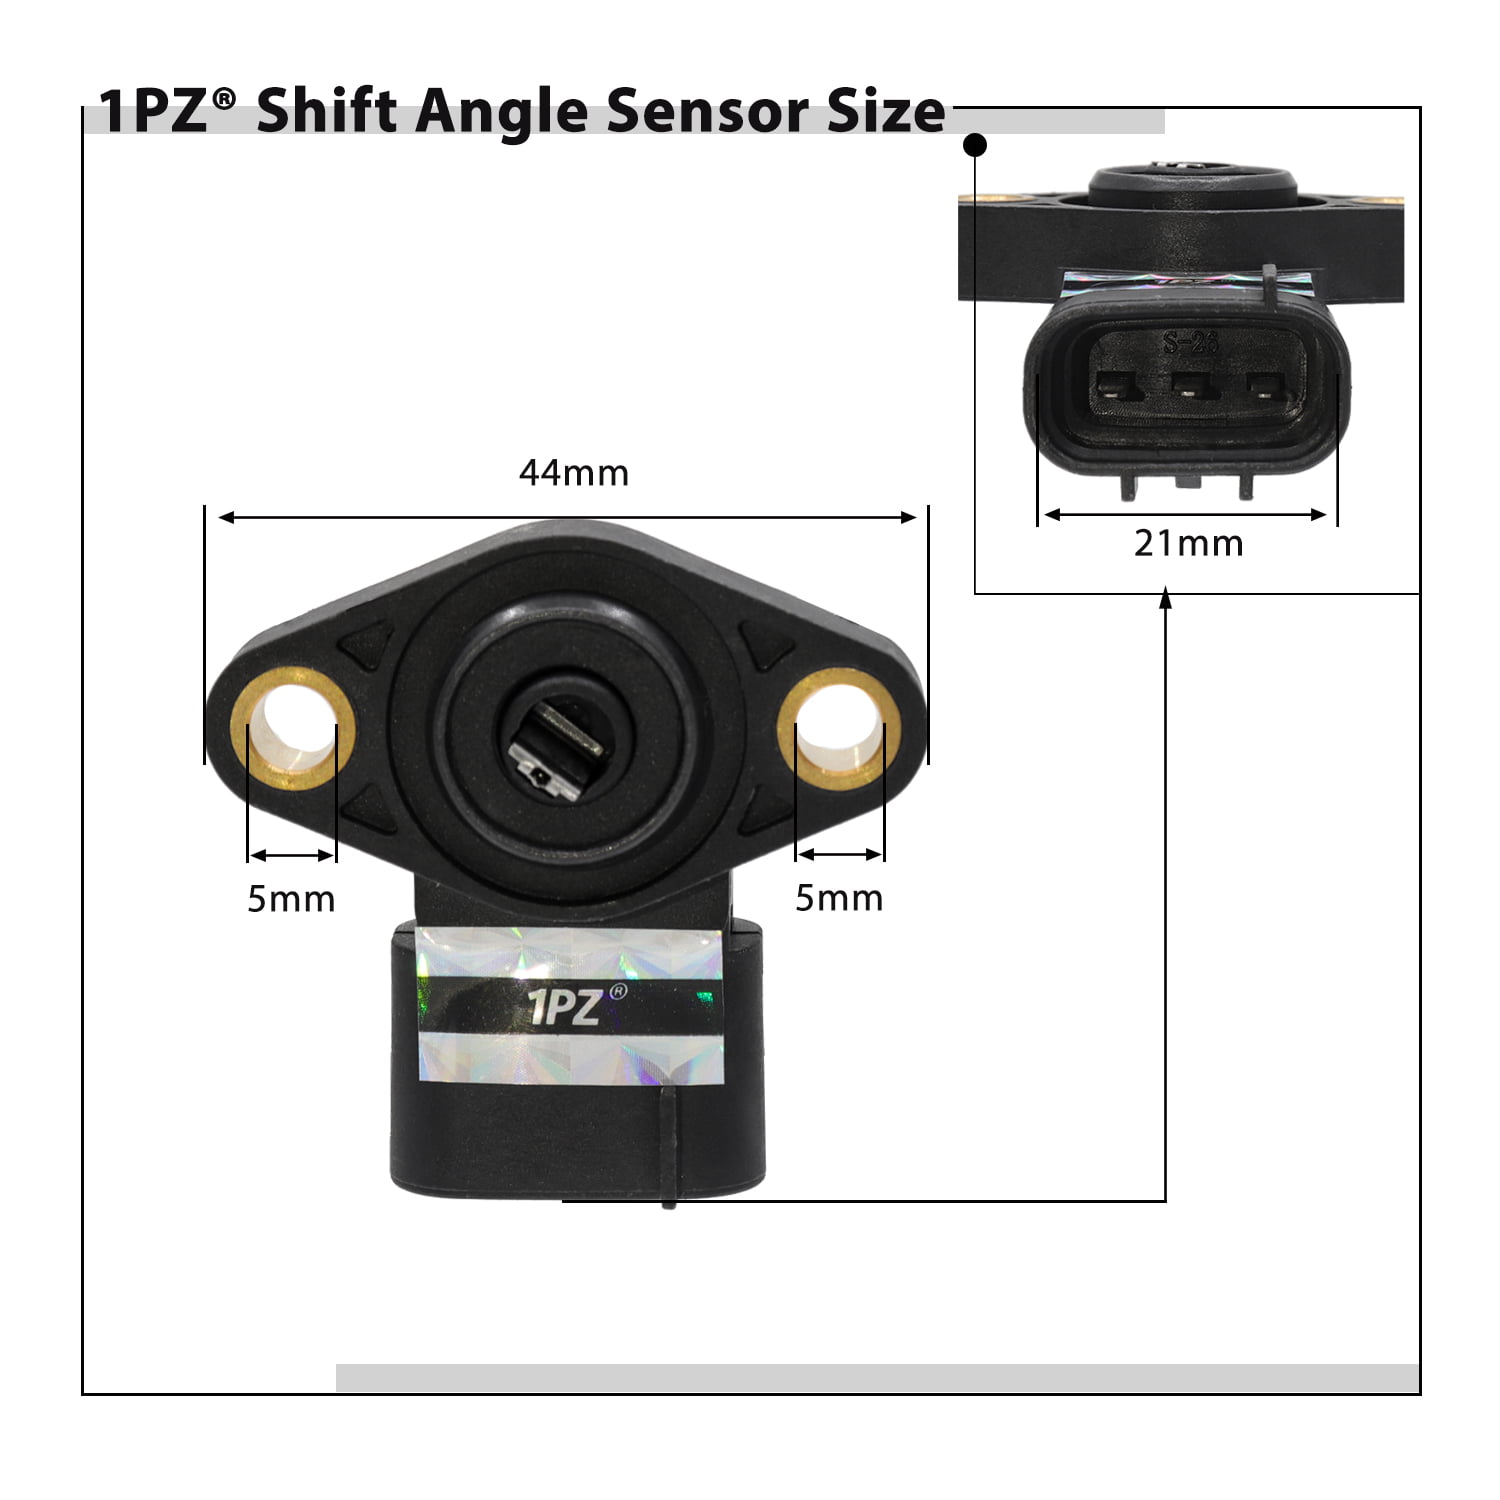 1PZ T35-SA1 Shift Angle Sensor for Honda Recon Rancher Foreman SXS500M2 SXS1000M5D TRX250 TRX350 TRX420 TRX500 Pioneer 500 1000 2002-2019 38800-HP0-A11 38800-HR3-A21 